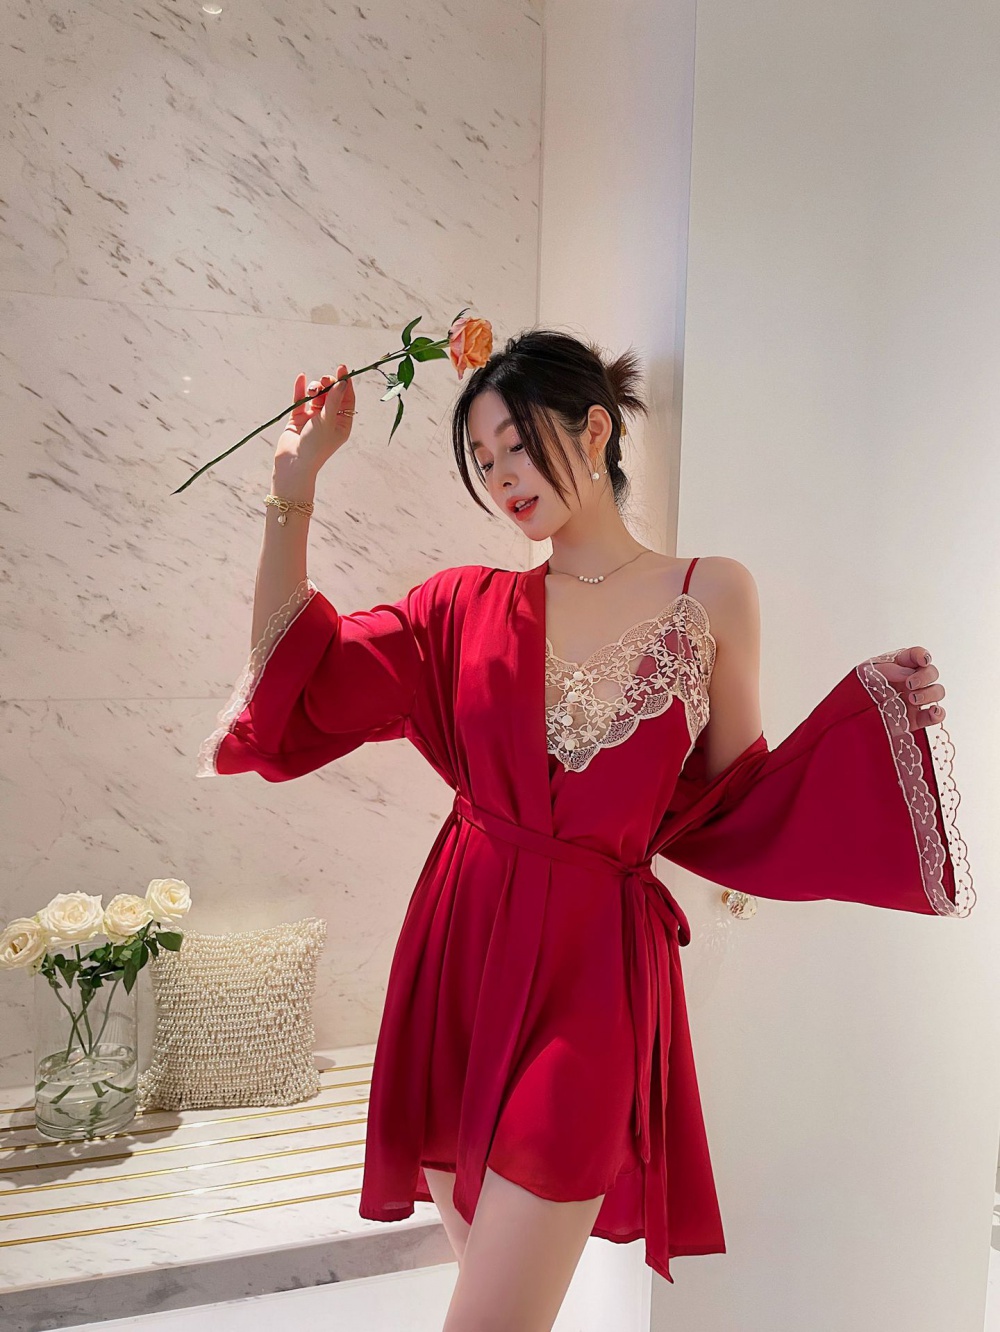 Ice silk nightgown pajamas 2pcs set for women